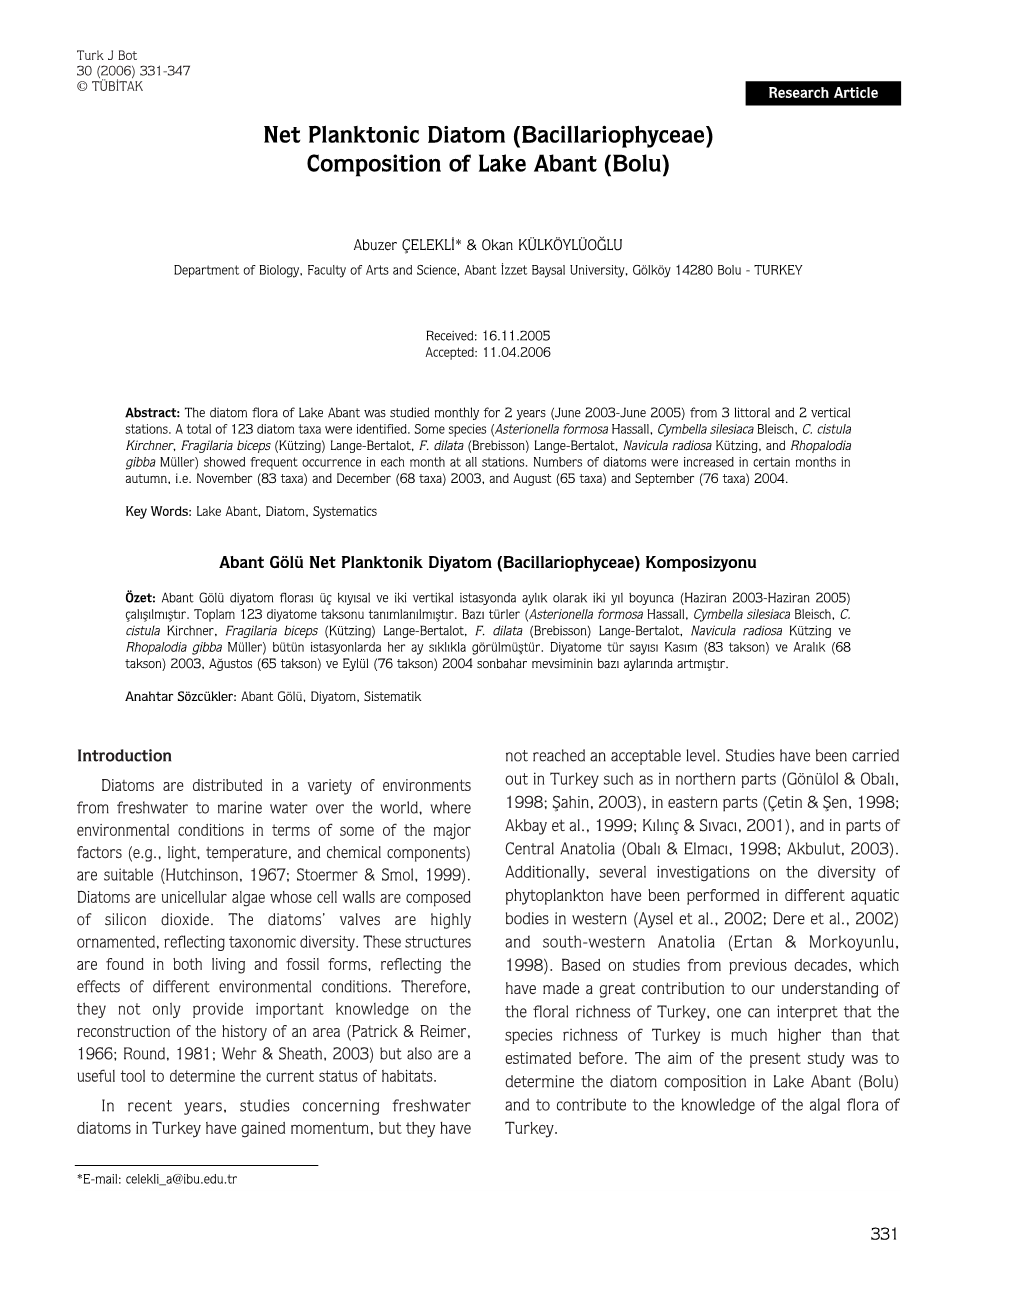 Net Planktonic Diatom (Bacillariophyceae) Composition of Lake Abant (Bolu)